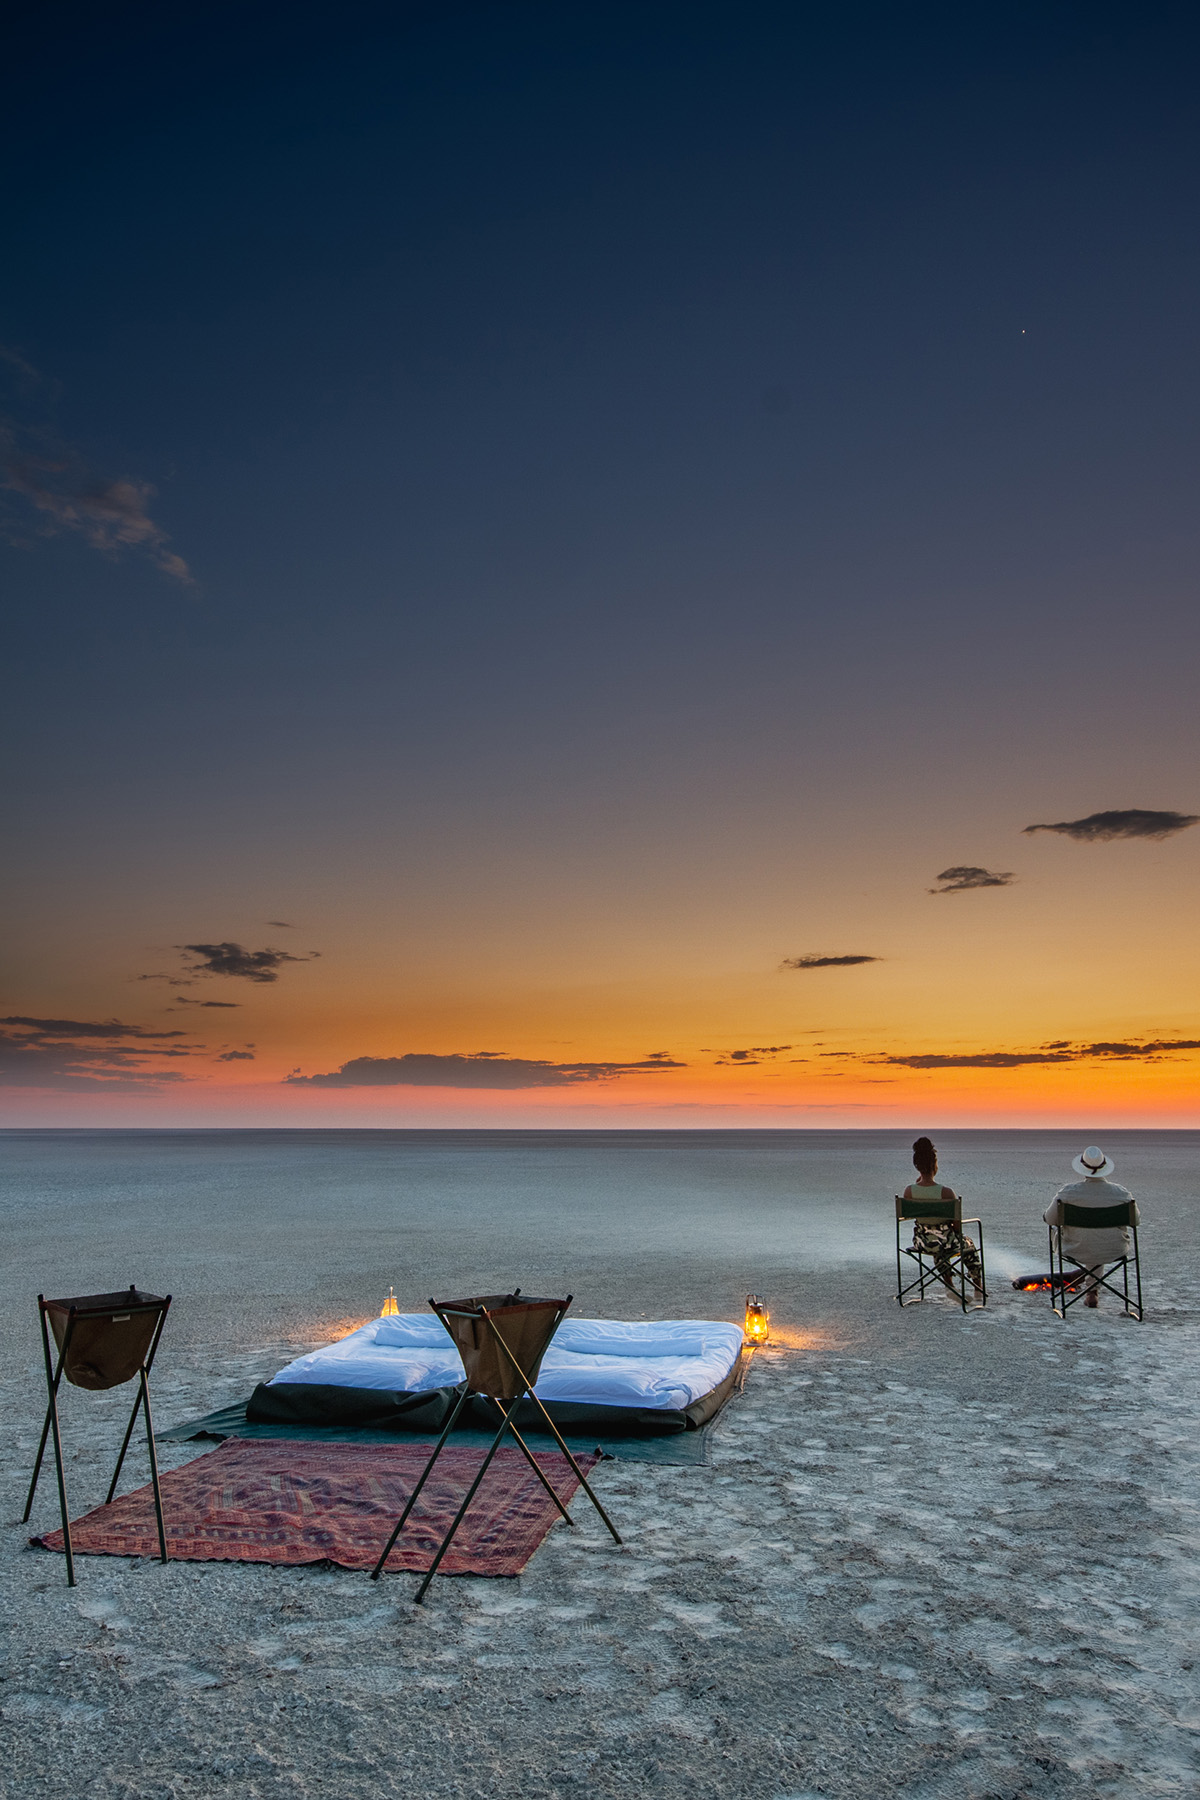 Sleeping set up on sandy beach at sunset